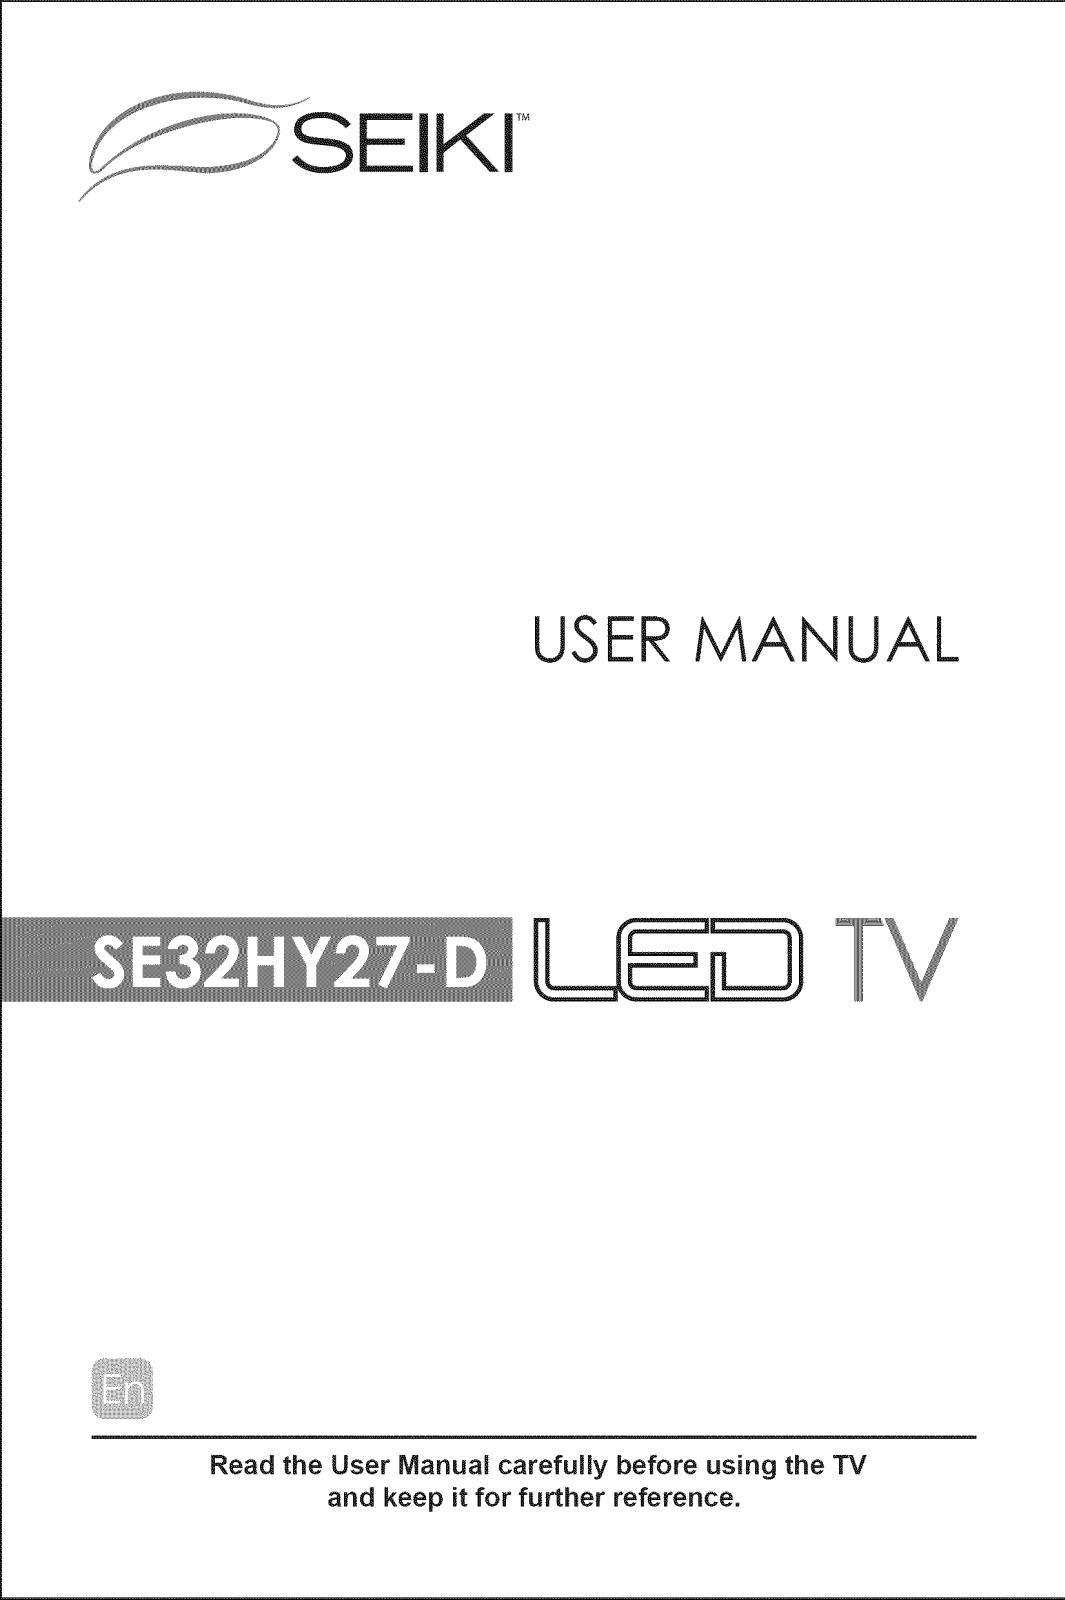 Seiki SE32HY27-D Owner’s Manual